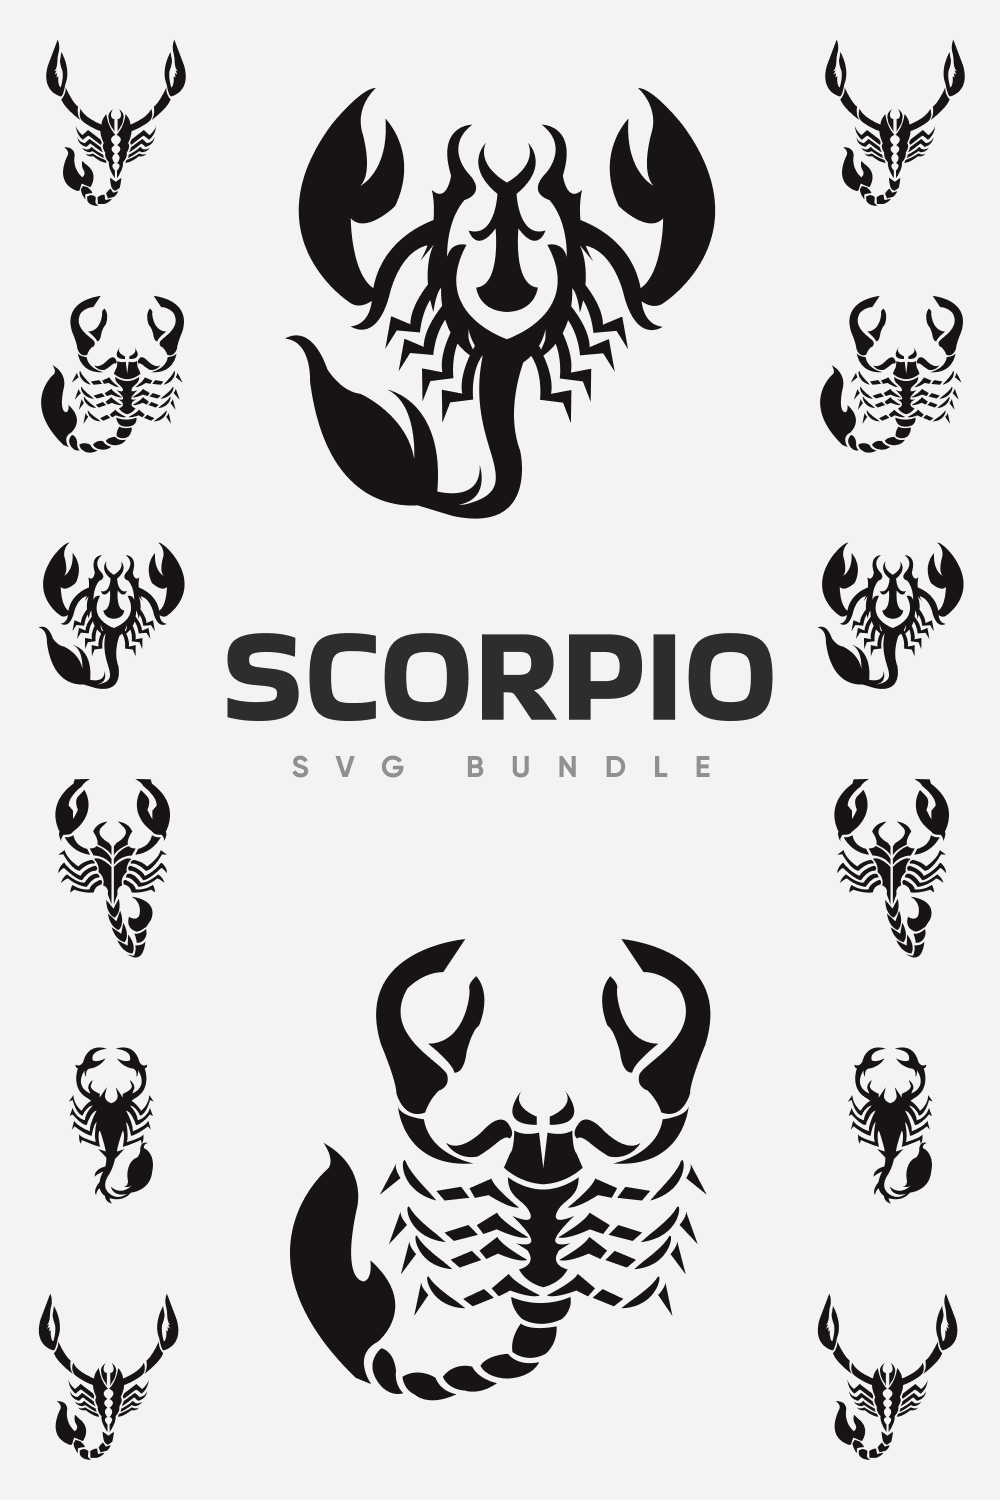 Scorpio SVG bundle.